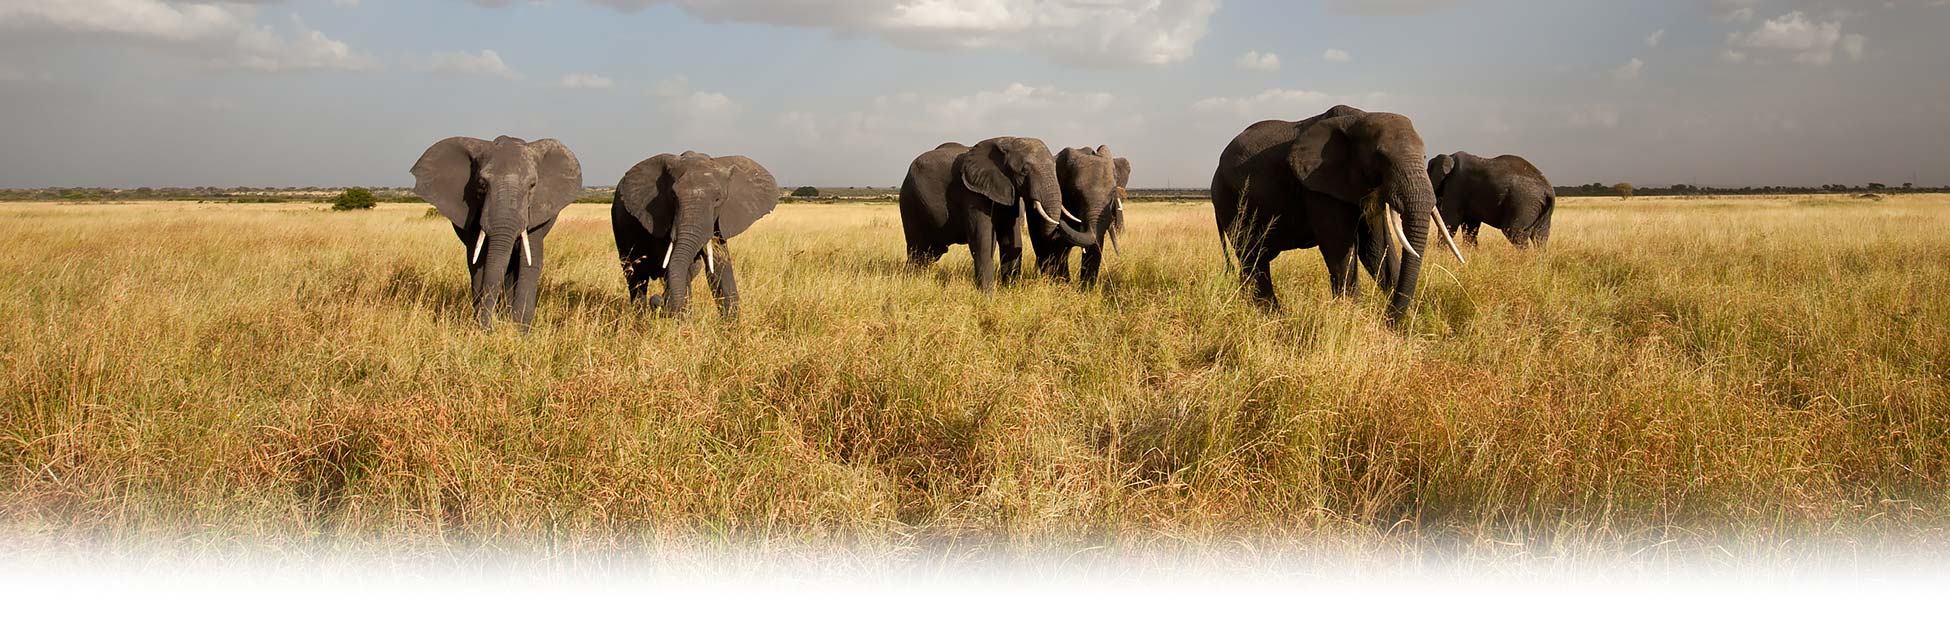 zuid-afrika-olifanten-port-elizabeth.jpg